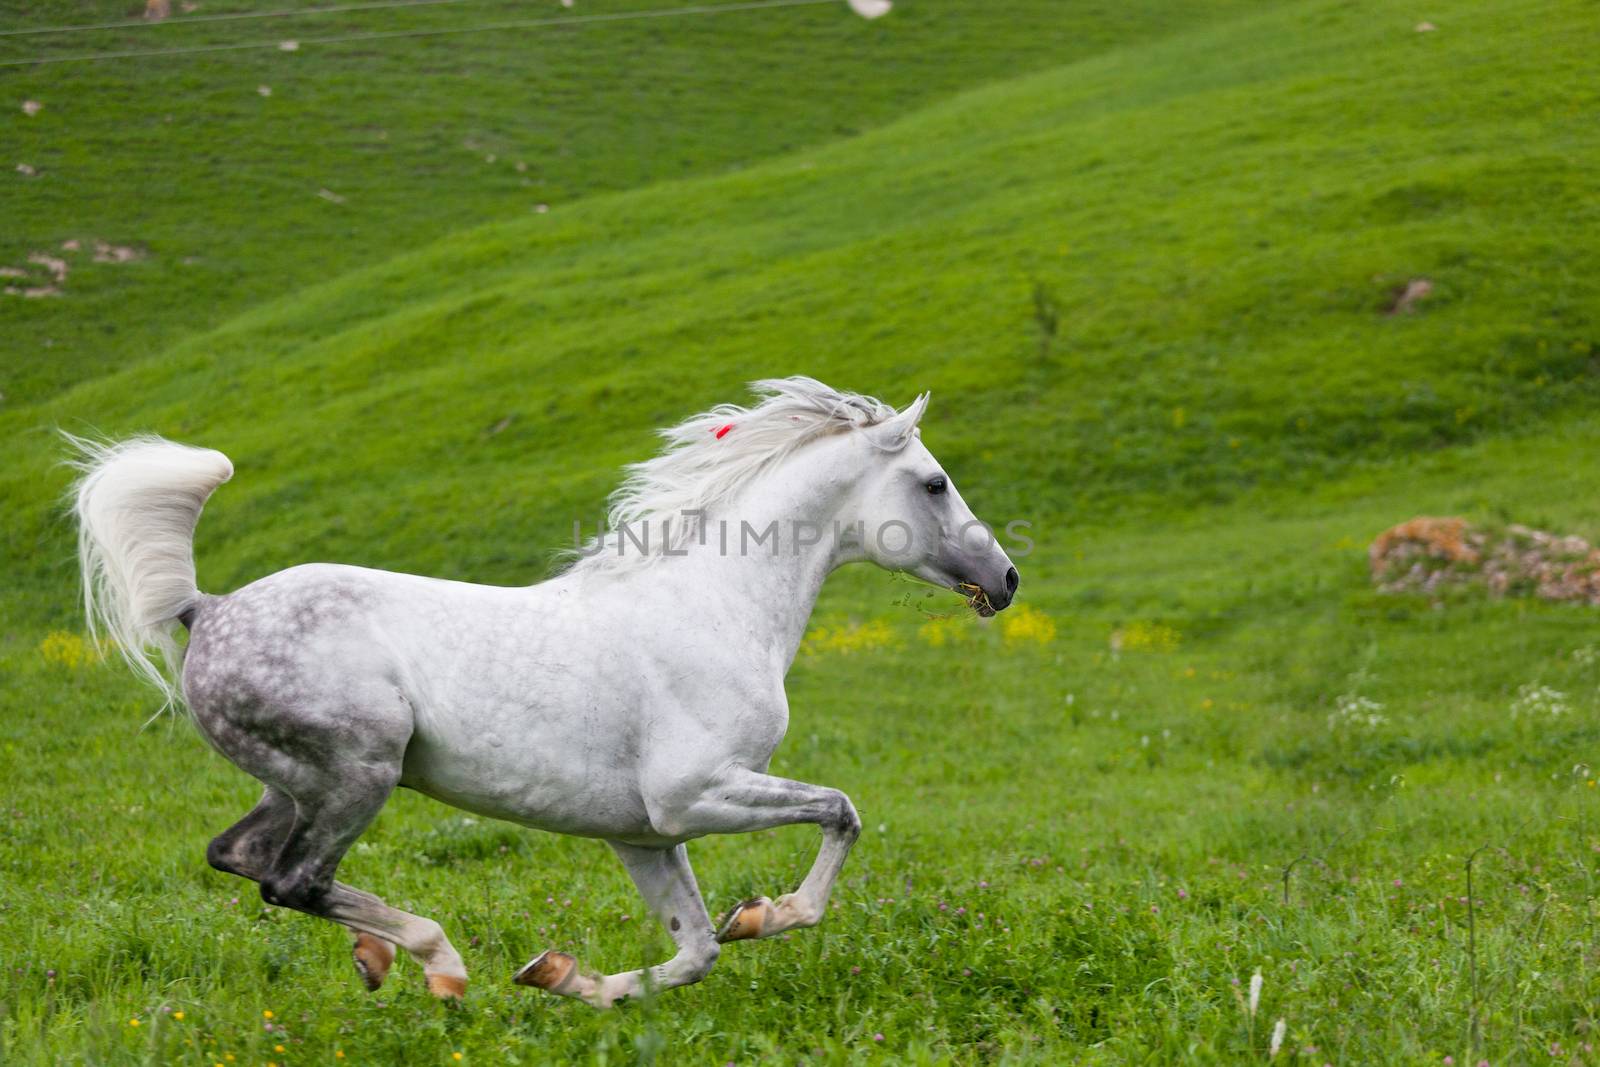 Gray Arab horse gallops on a green meadow